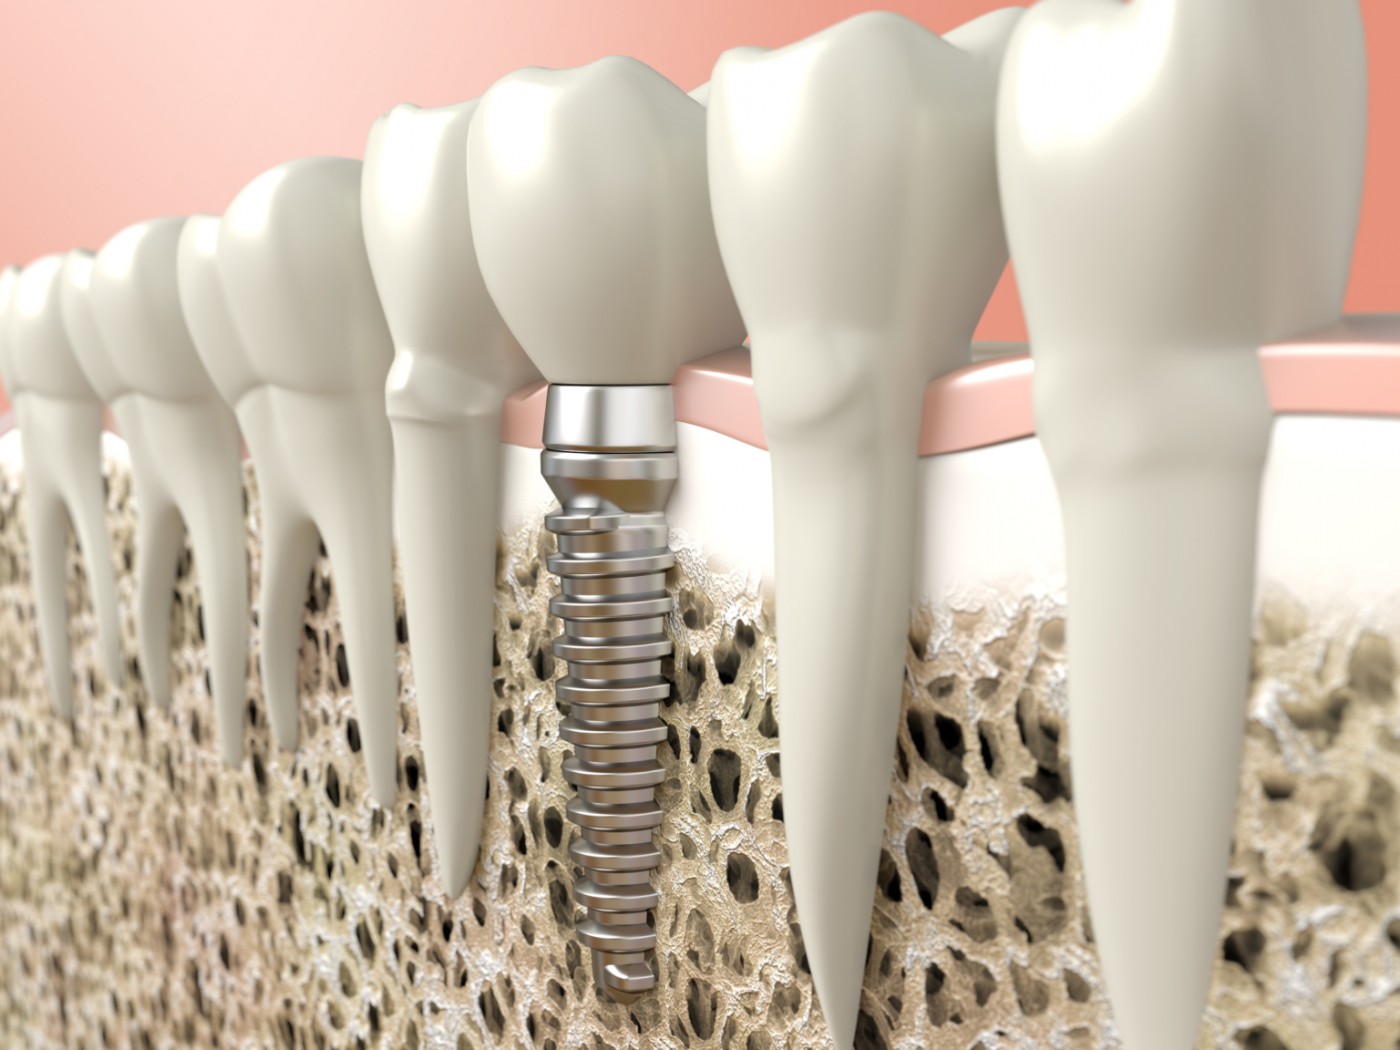 implant dentar Straumann